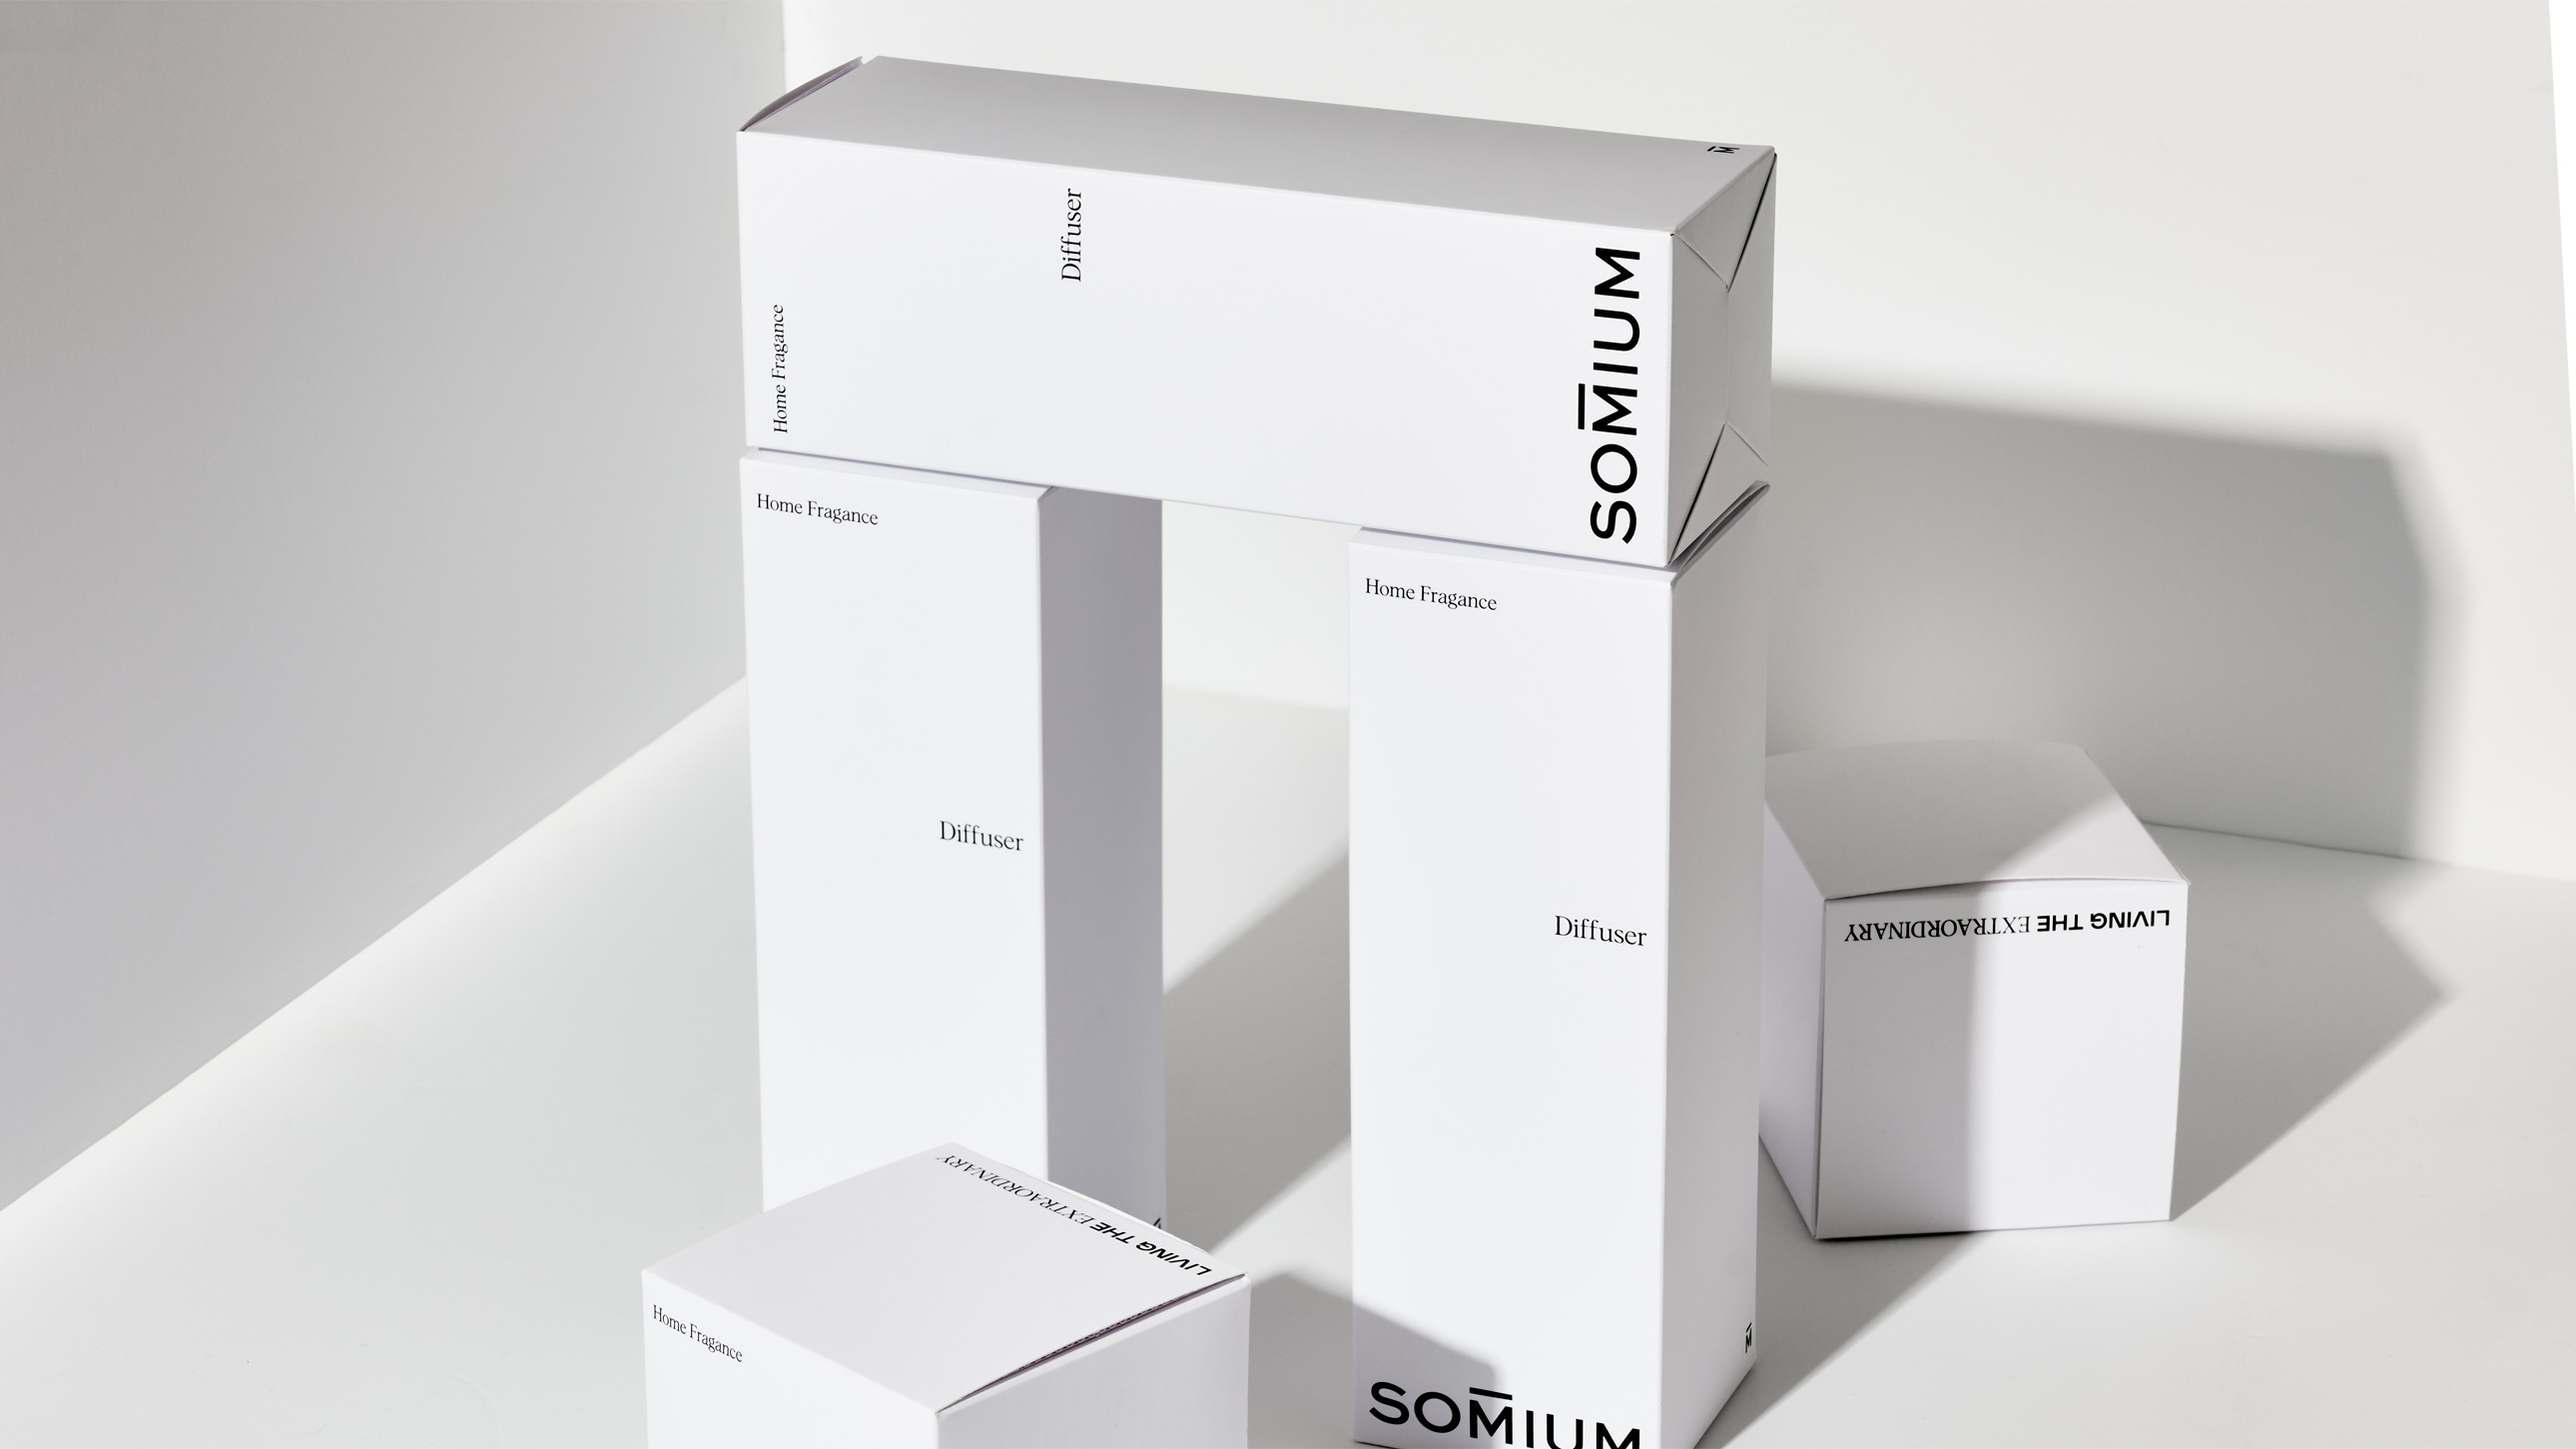 diseno-packaging-grafico-fragance-perfume-somium-evangelisti-6.jpg